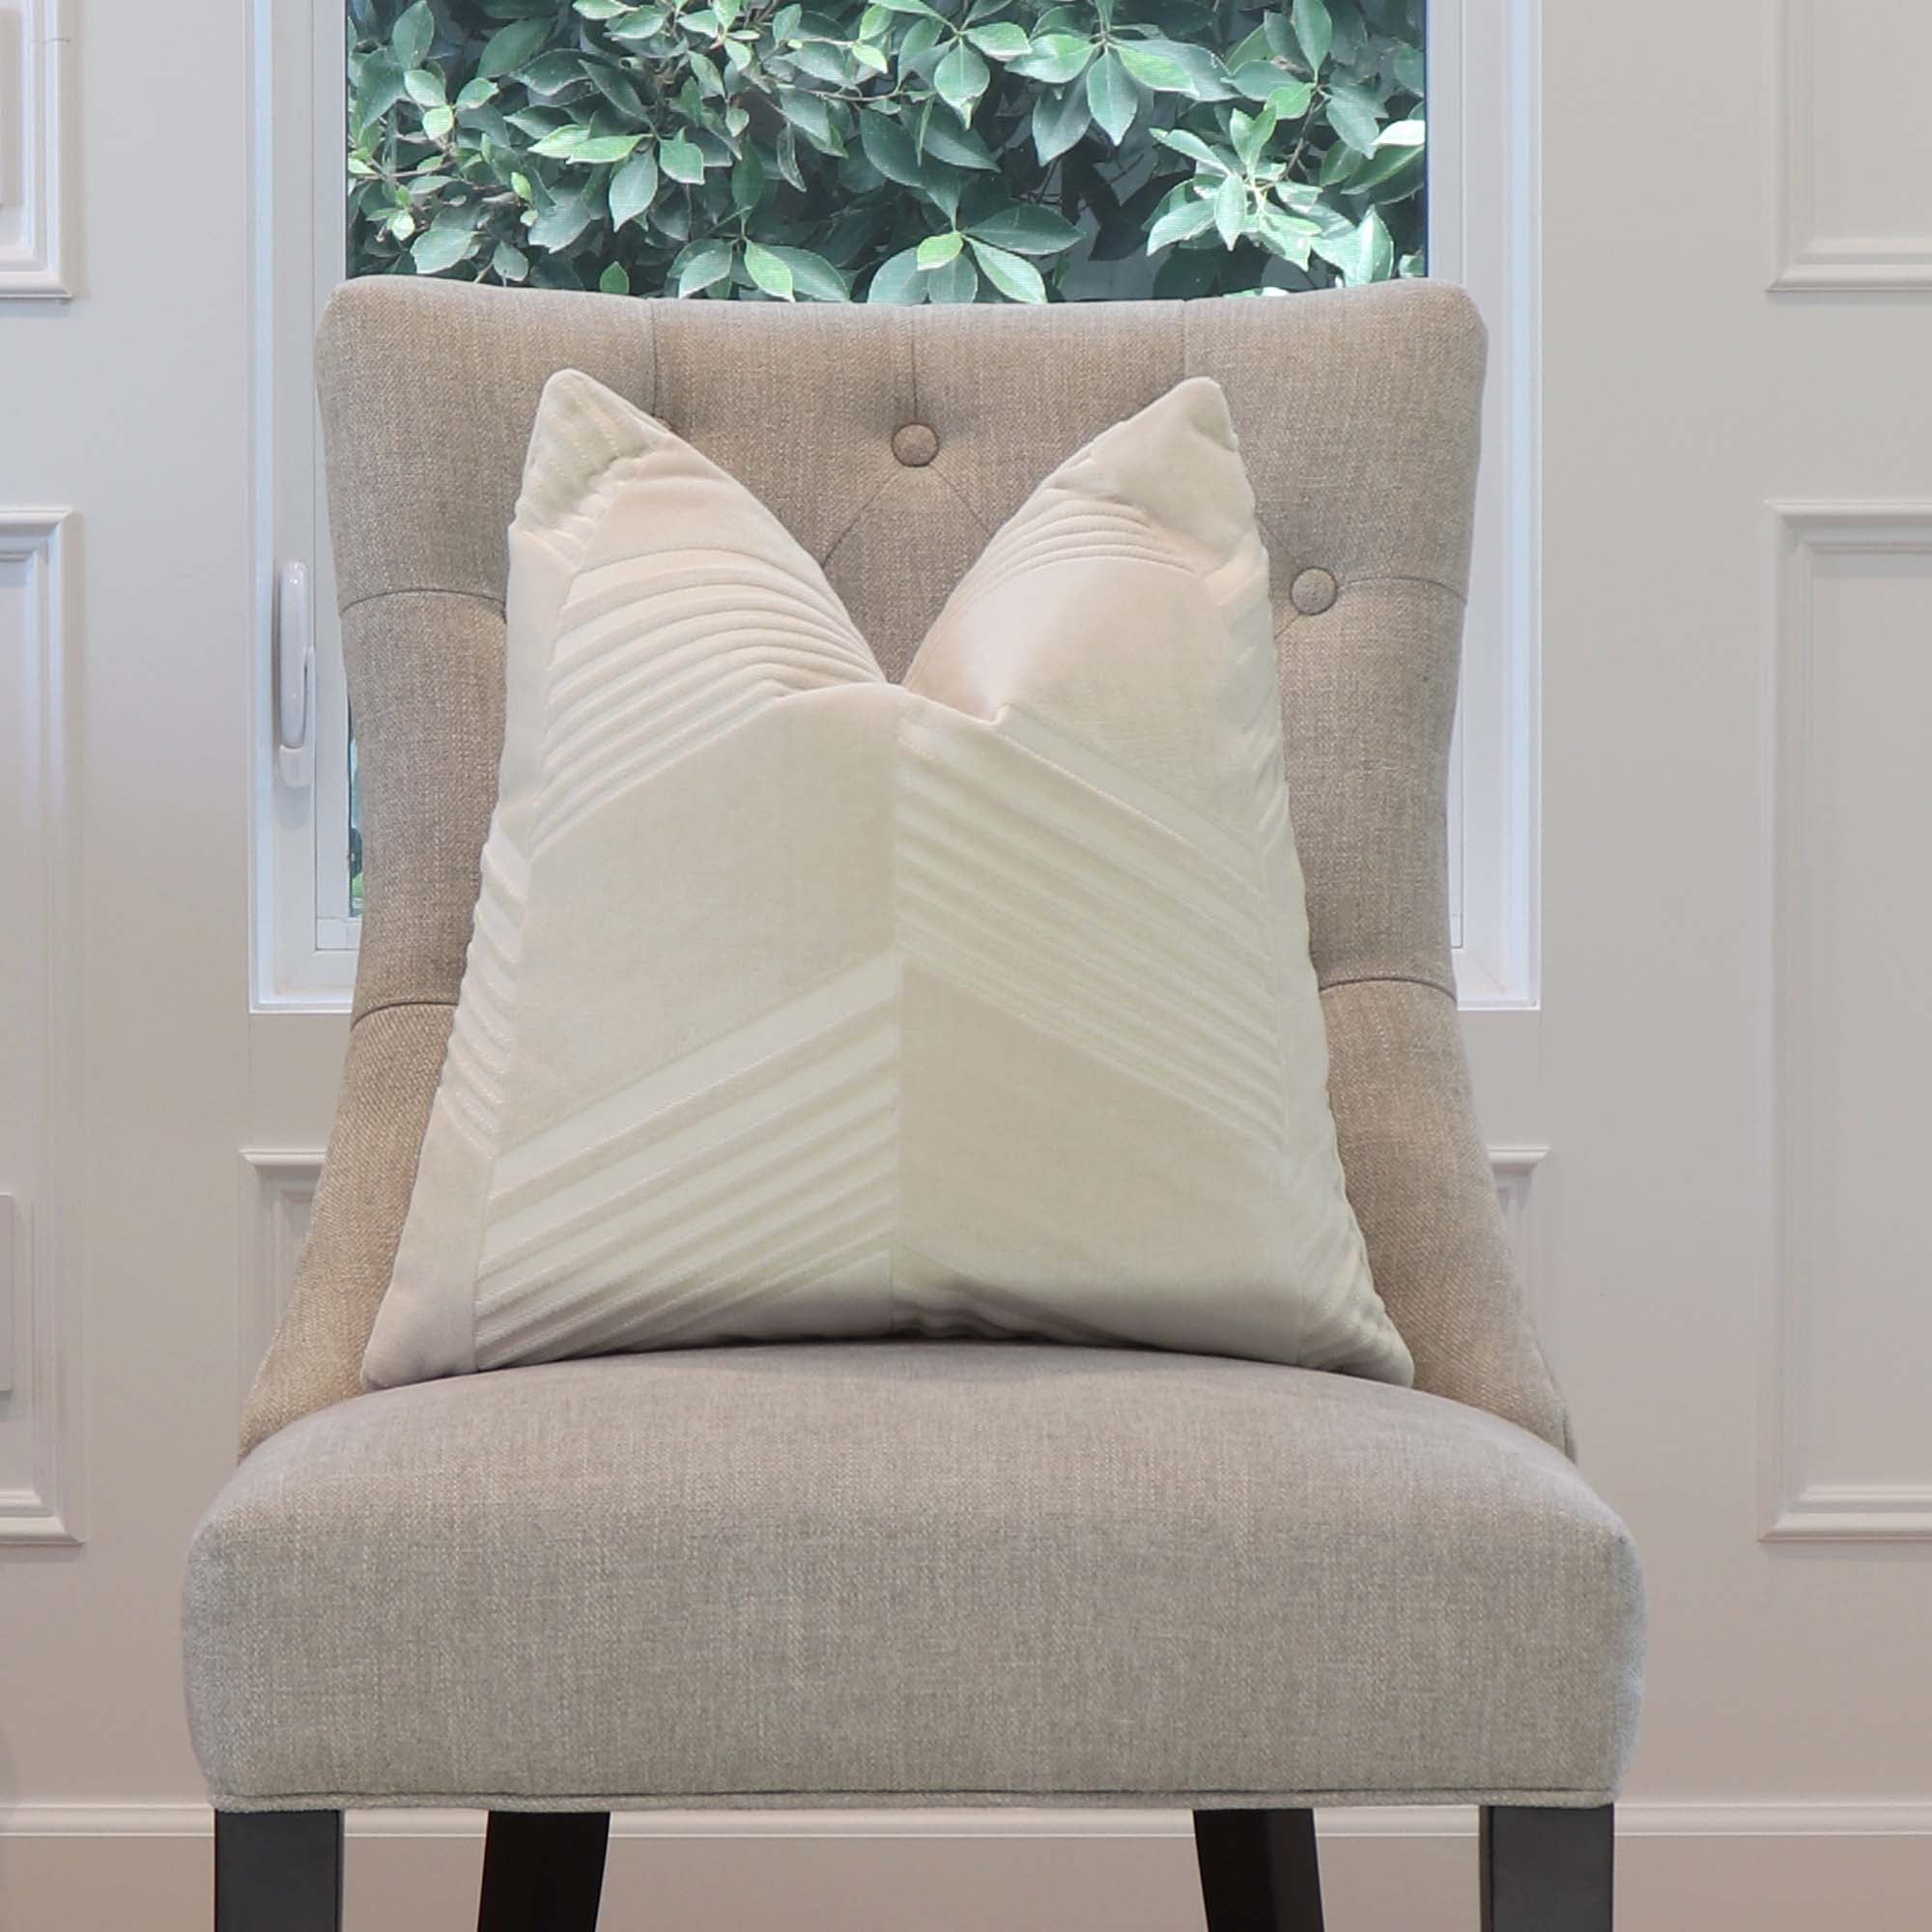 Schumacher Jessie Cut Velvet Ivory Designer Decorative Throw Pillow Cover on Armless Chair